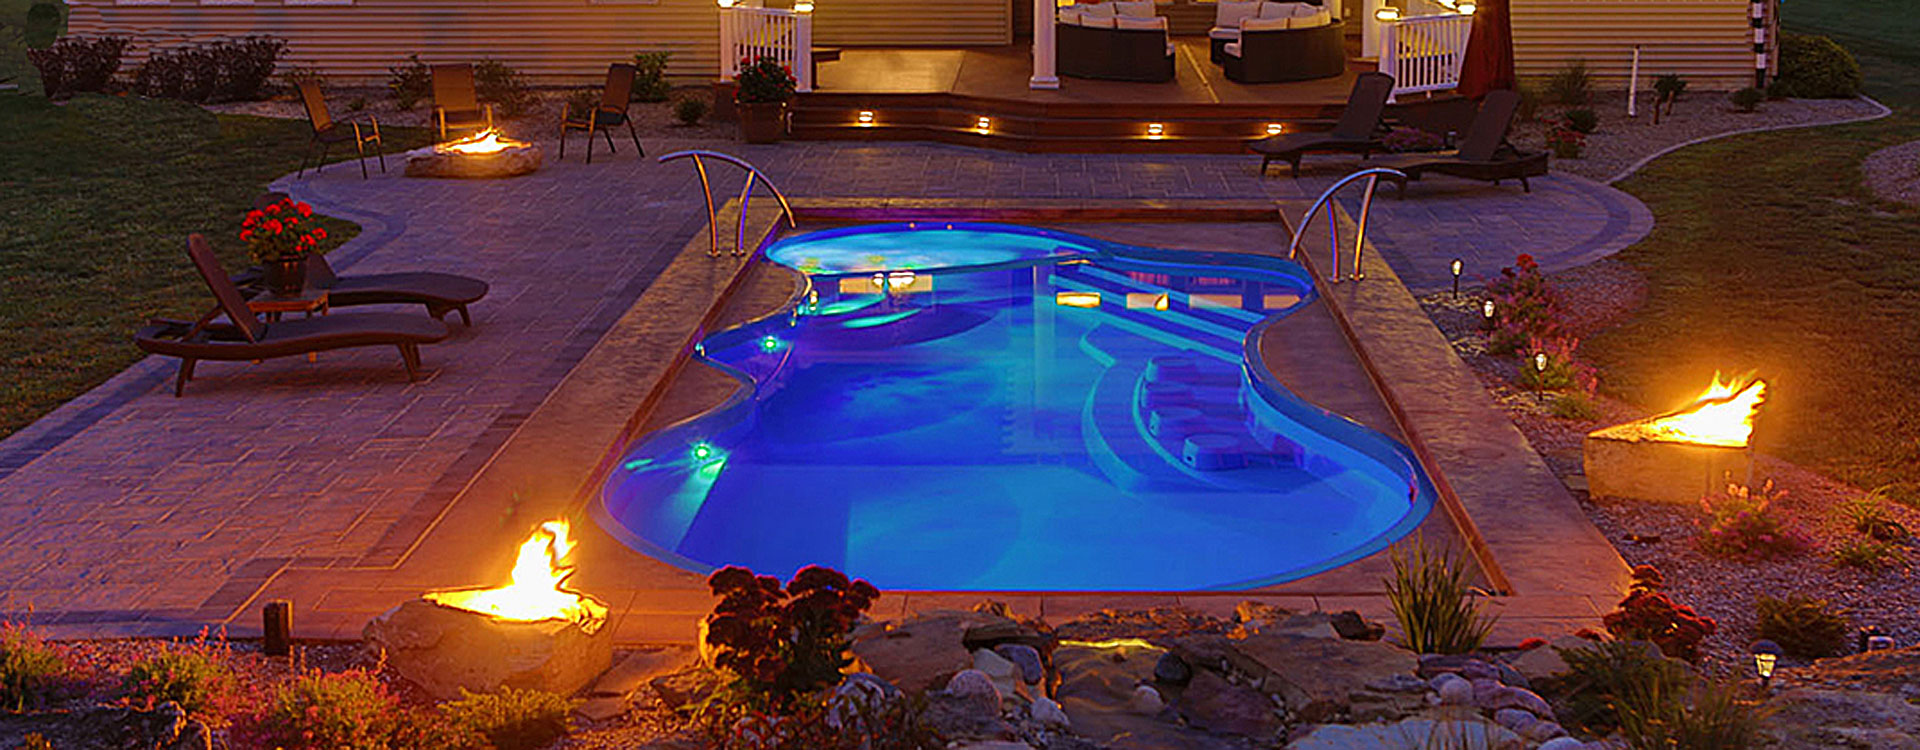 Paradise Pool and Spa Hot Tub